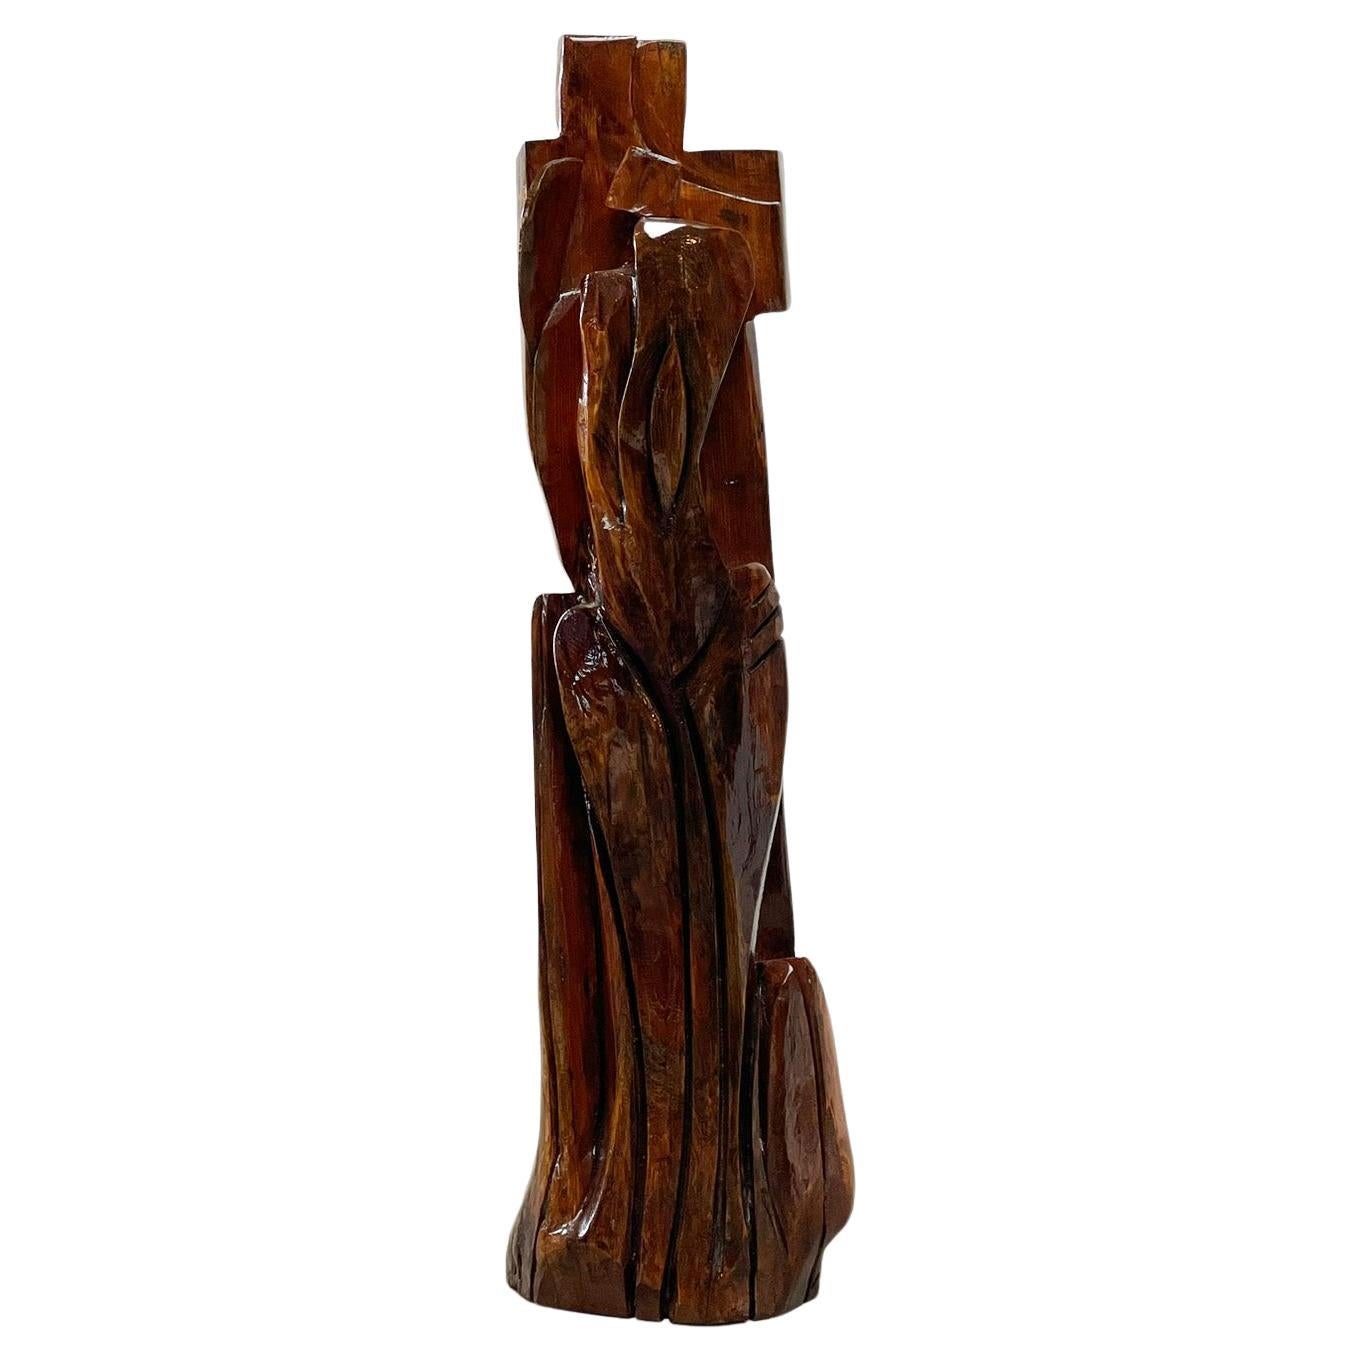 XL 170cm Belgian wooden sculpture For Sale